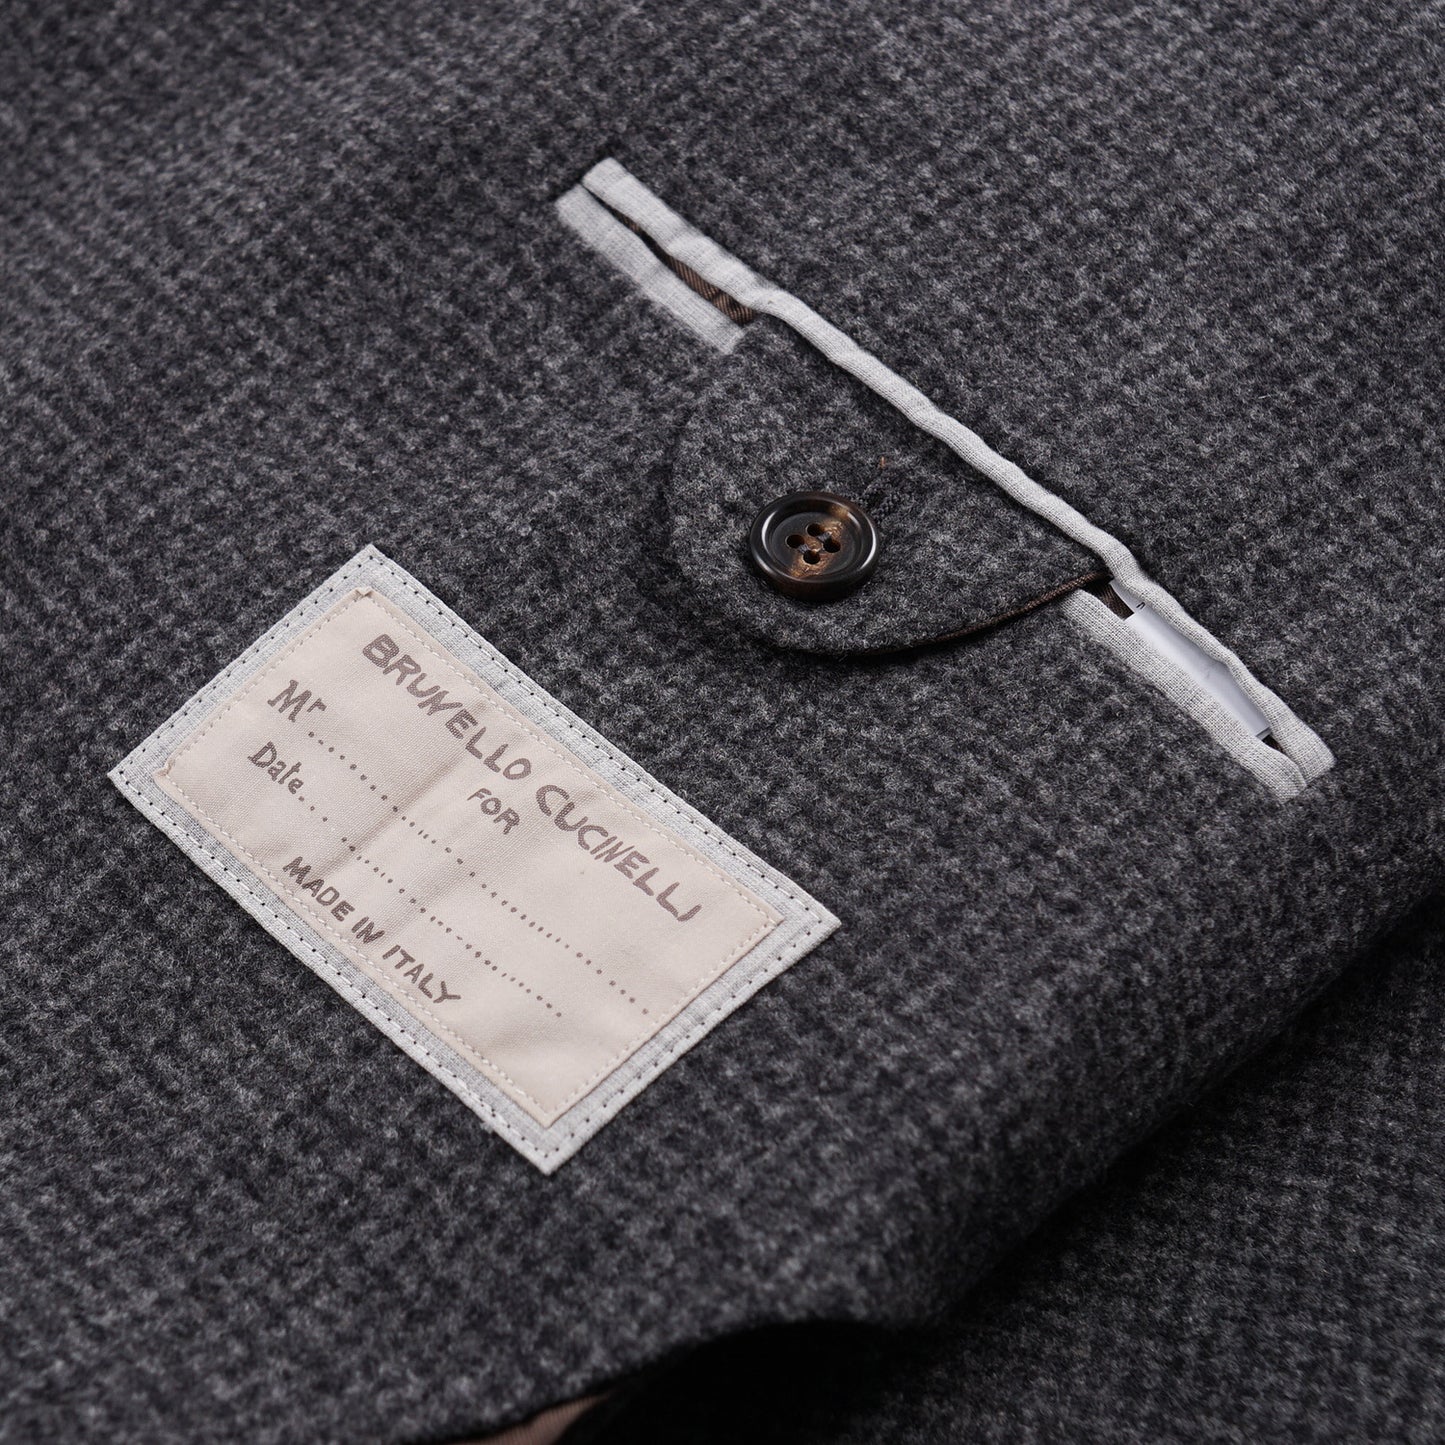 Brunello Cucinelli Soft Wool-Silk-Cashmere Sport Coat - Top Shelf Apparel